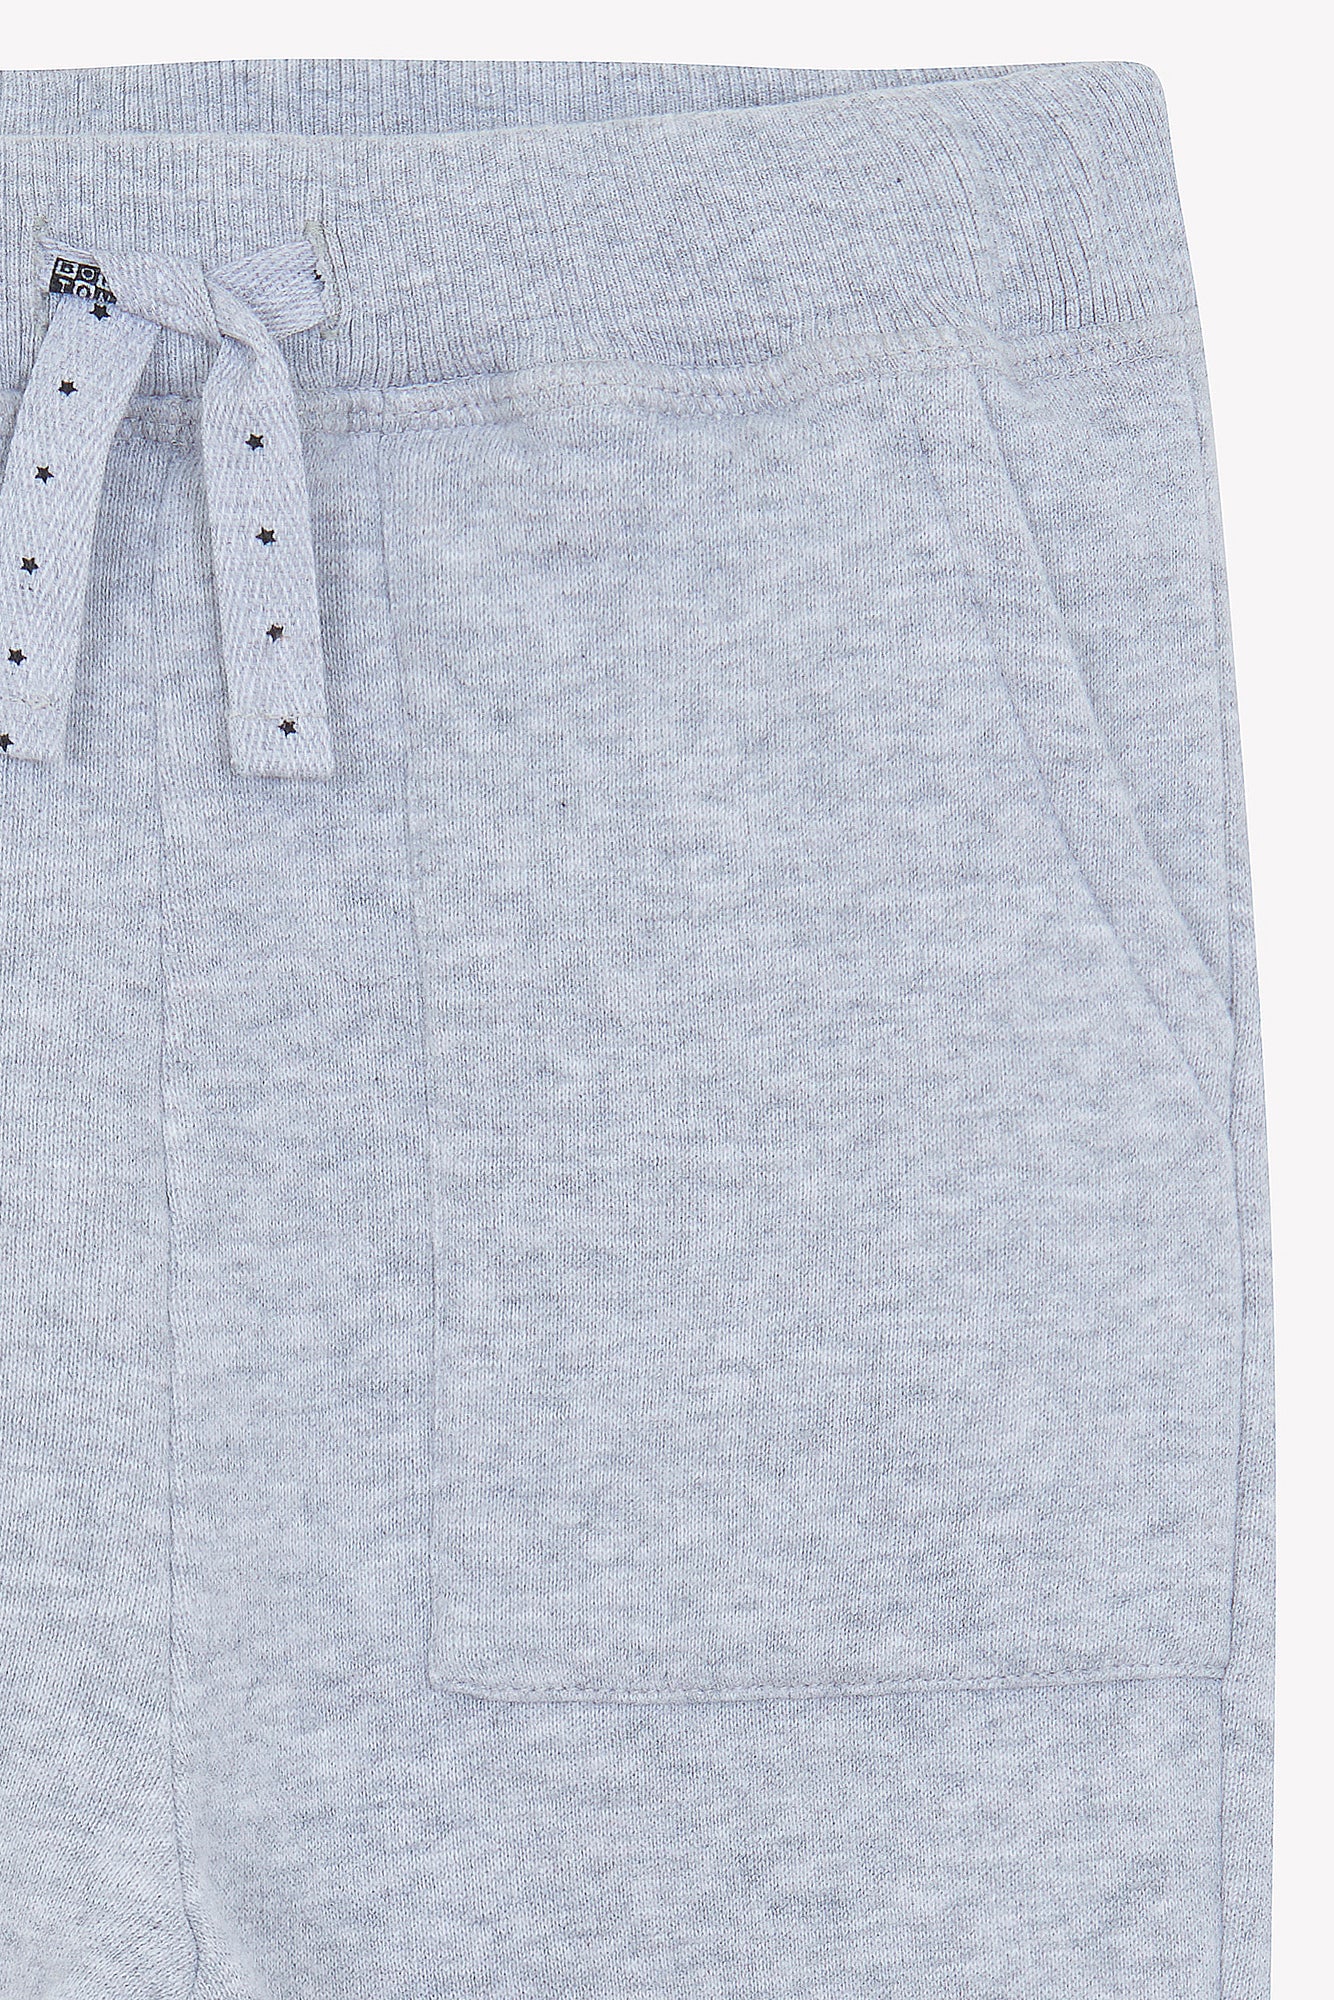 Trousers Jogging Tiyog Grey In 100% organic cotton